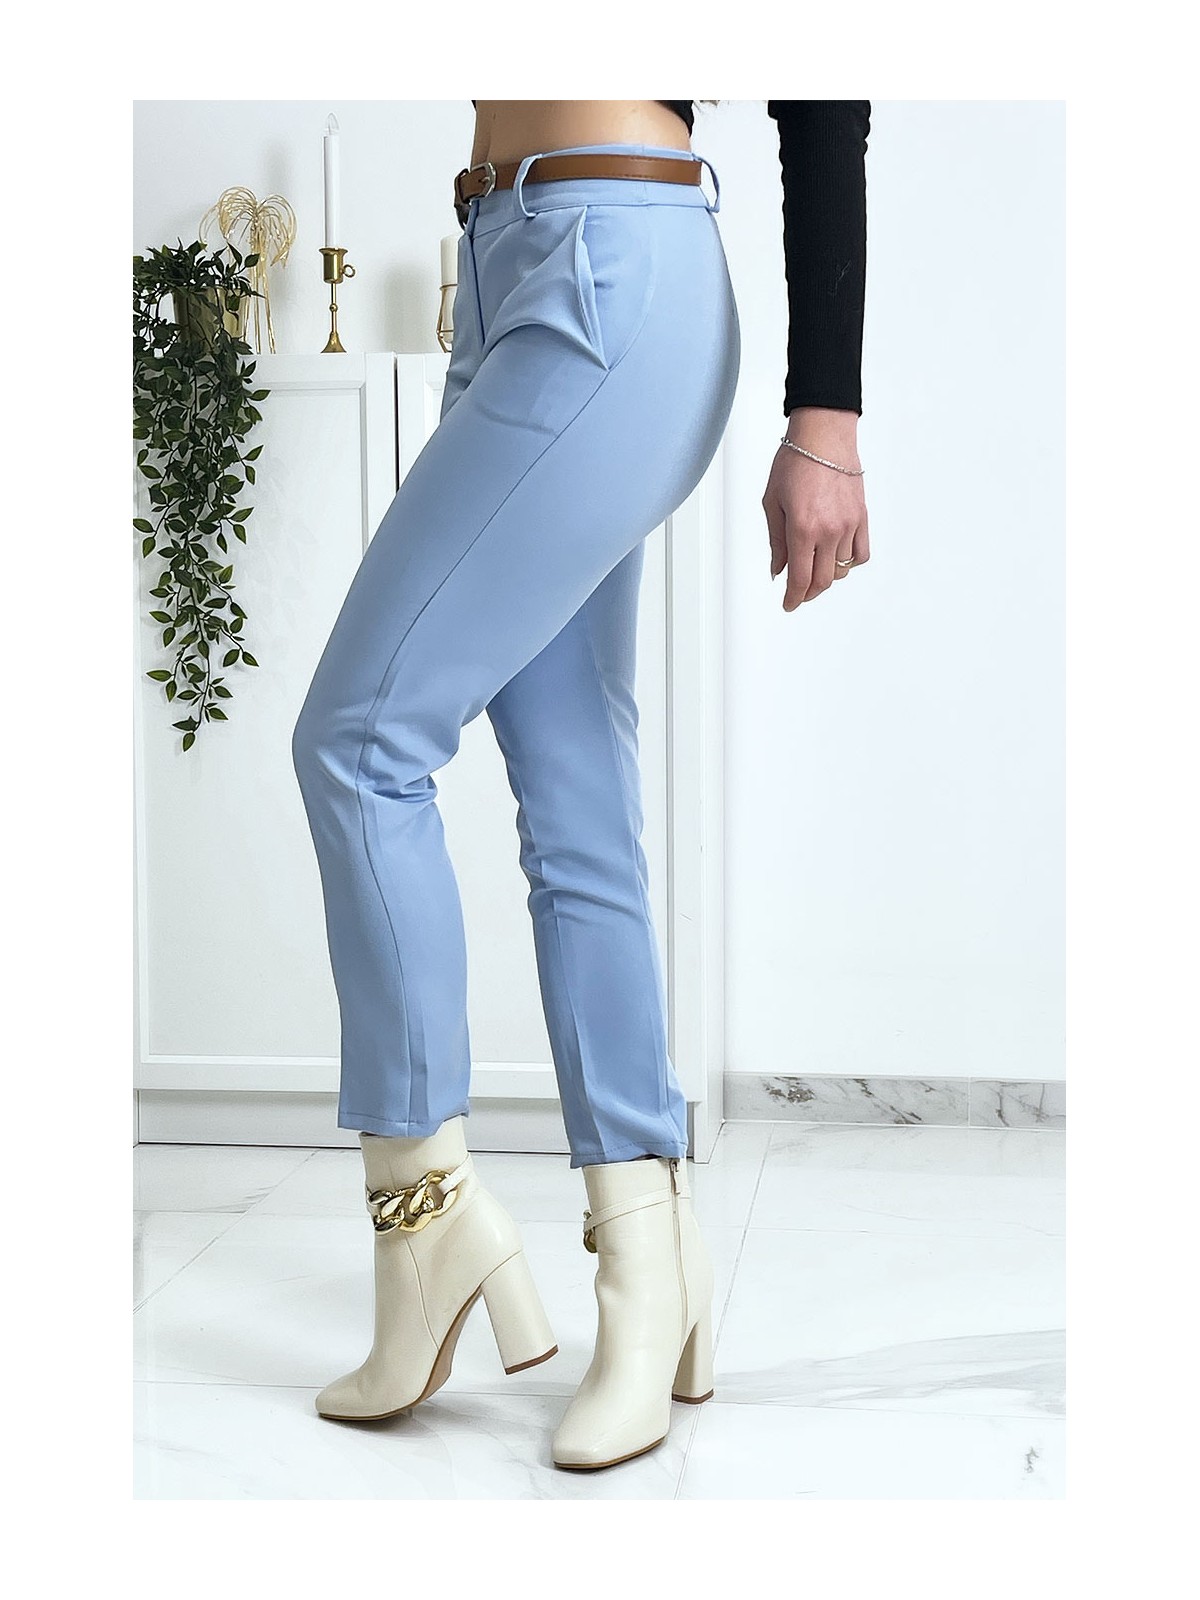 Pantalon working girl bleu avec poches et ceinture - 5